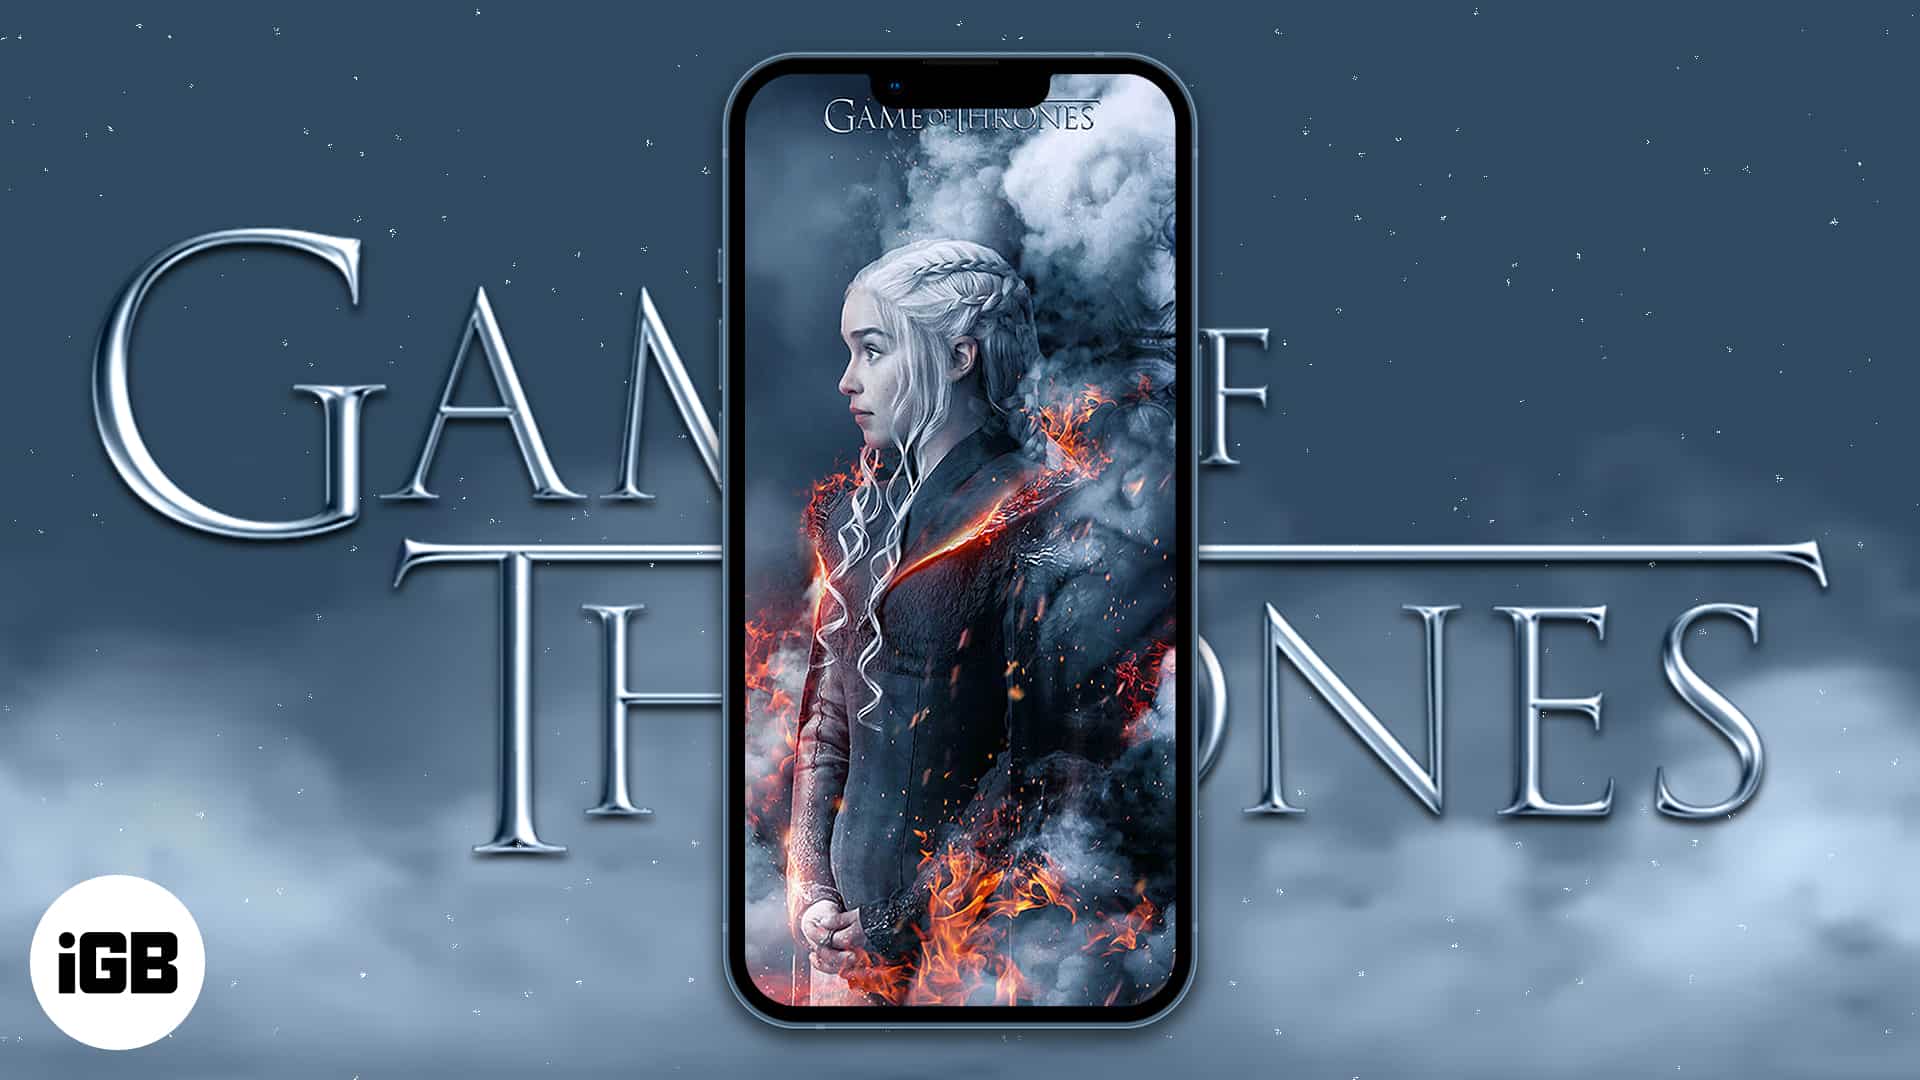 Best Game of thrones iPhone HD Wallpapers  iLikeWallpaper